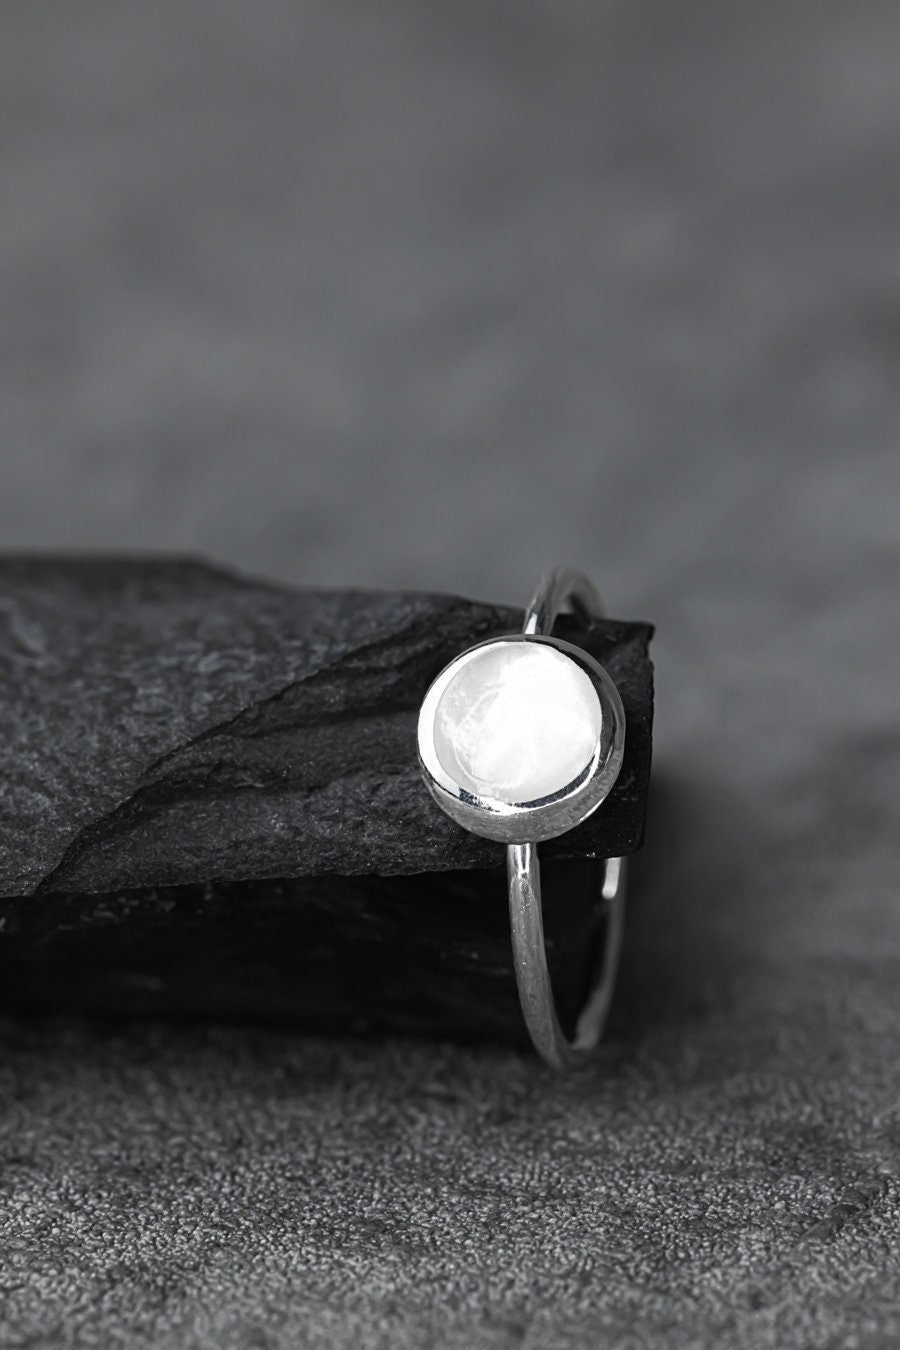 Pearl Ring - 925 Sterling Silver Elegancka Biżuteria morska - RG925-12